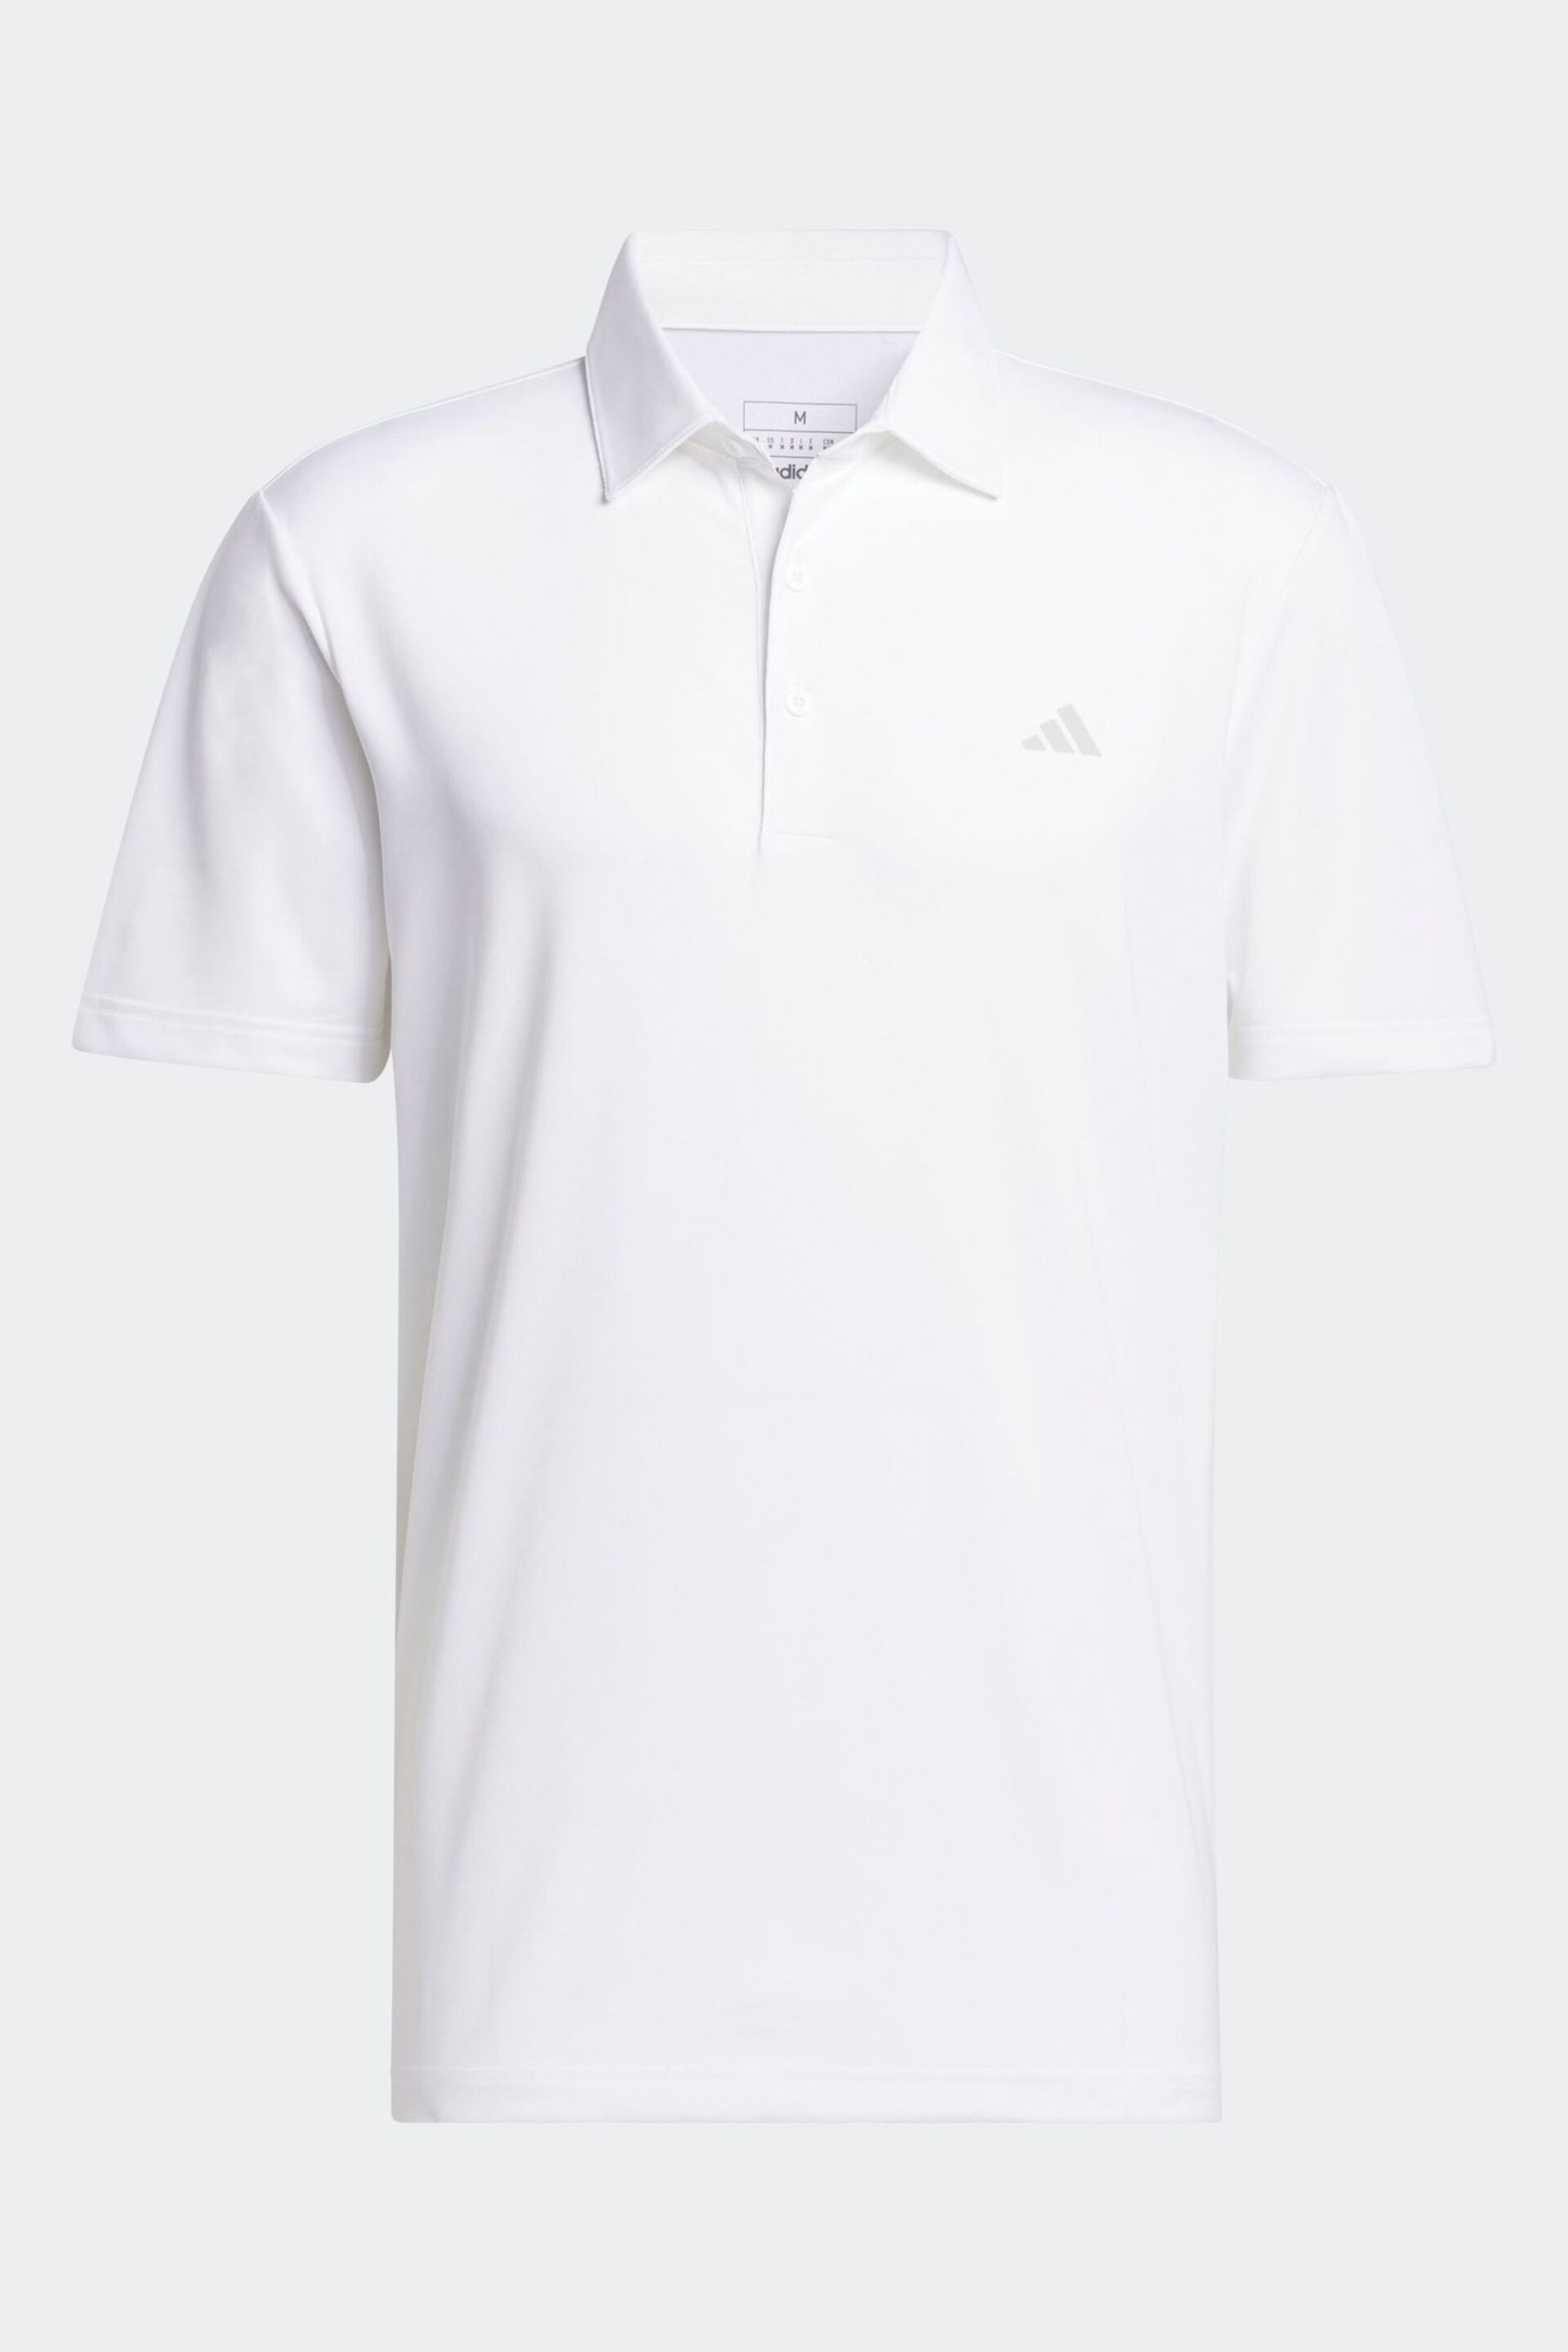 adidas Golf Ultimate365 Solid Polo Shirt - Image 8 of 8